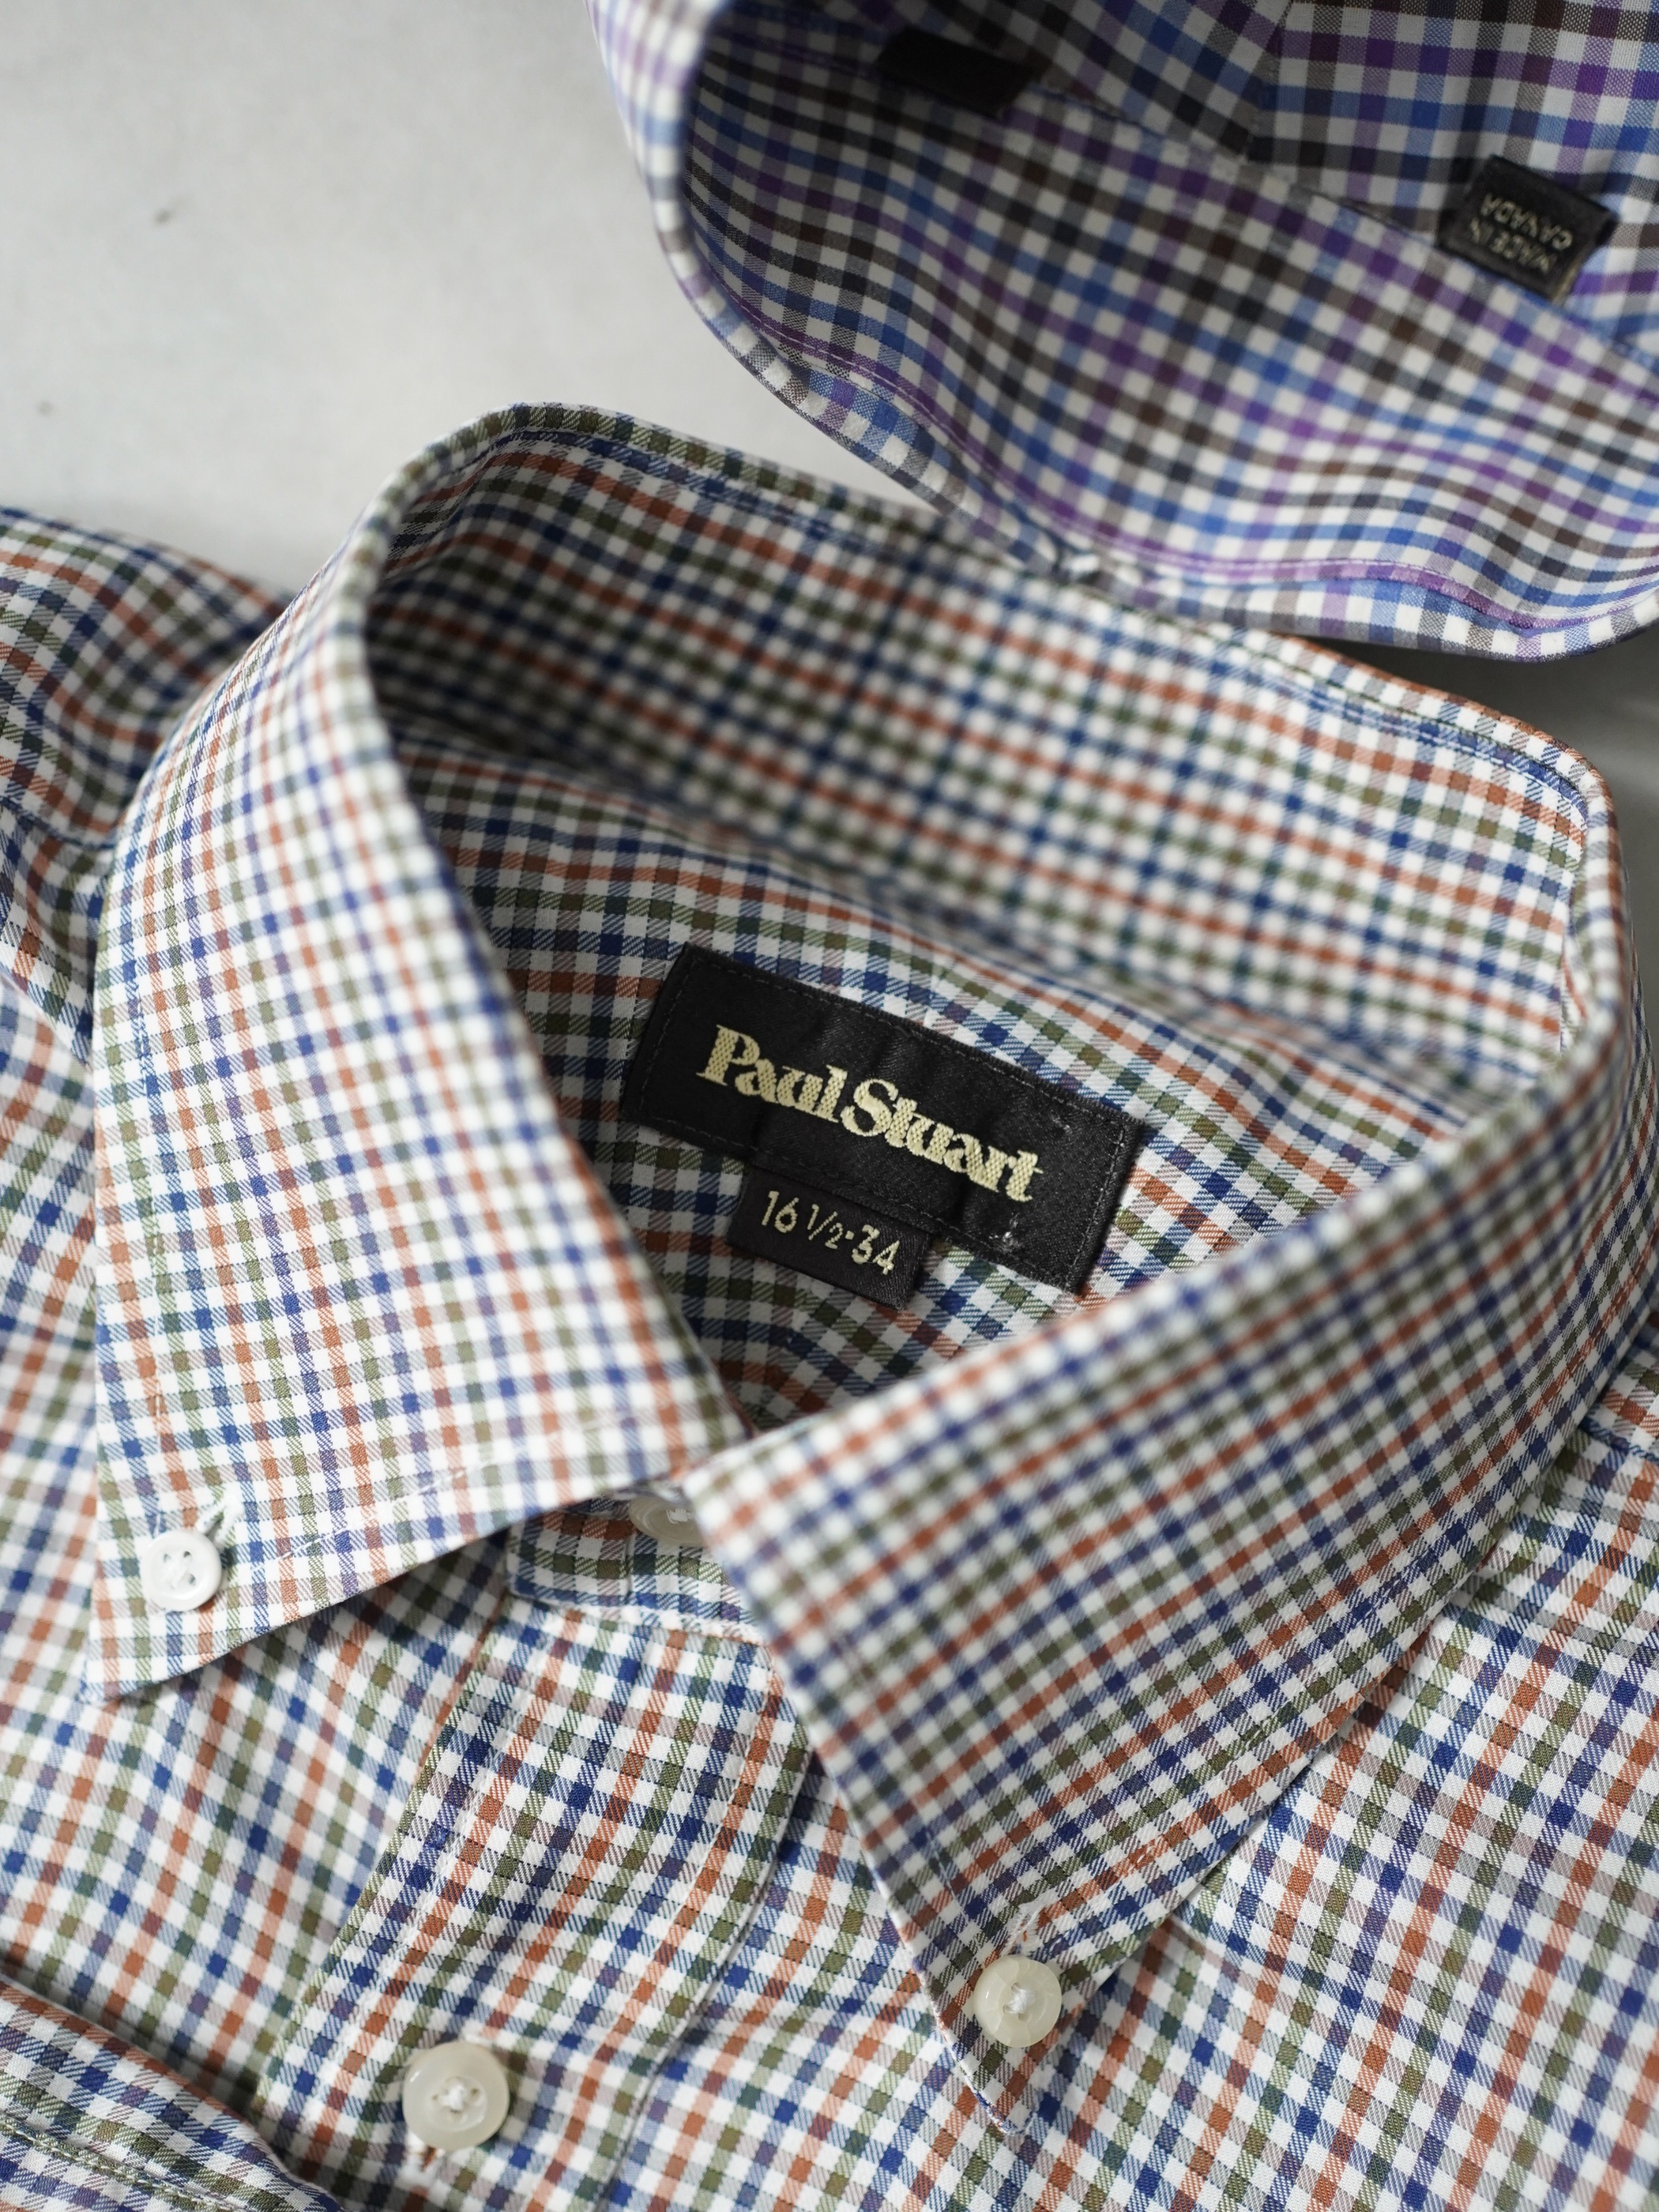 Paul Stuart gingham check B.D. Dress shirts / Made in Canada